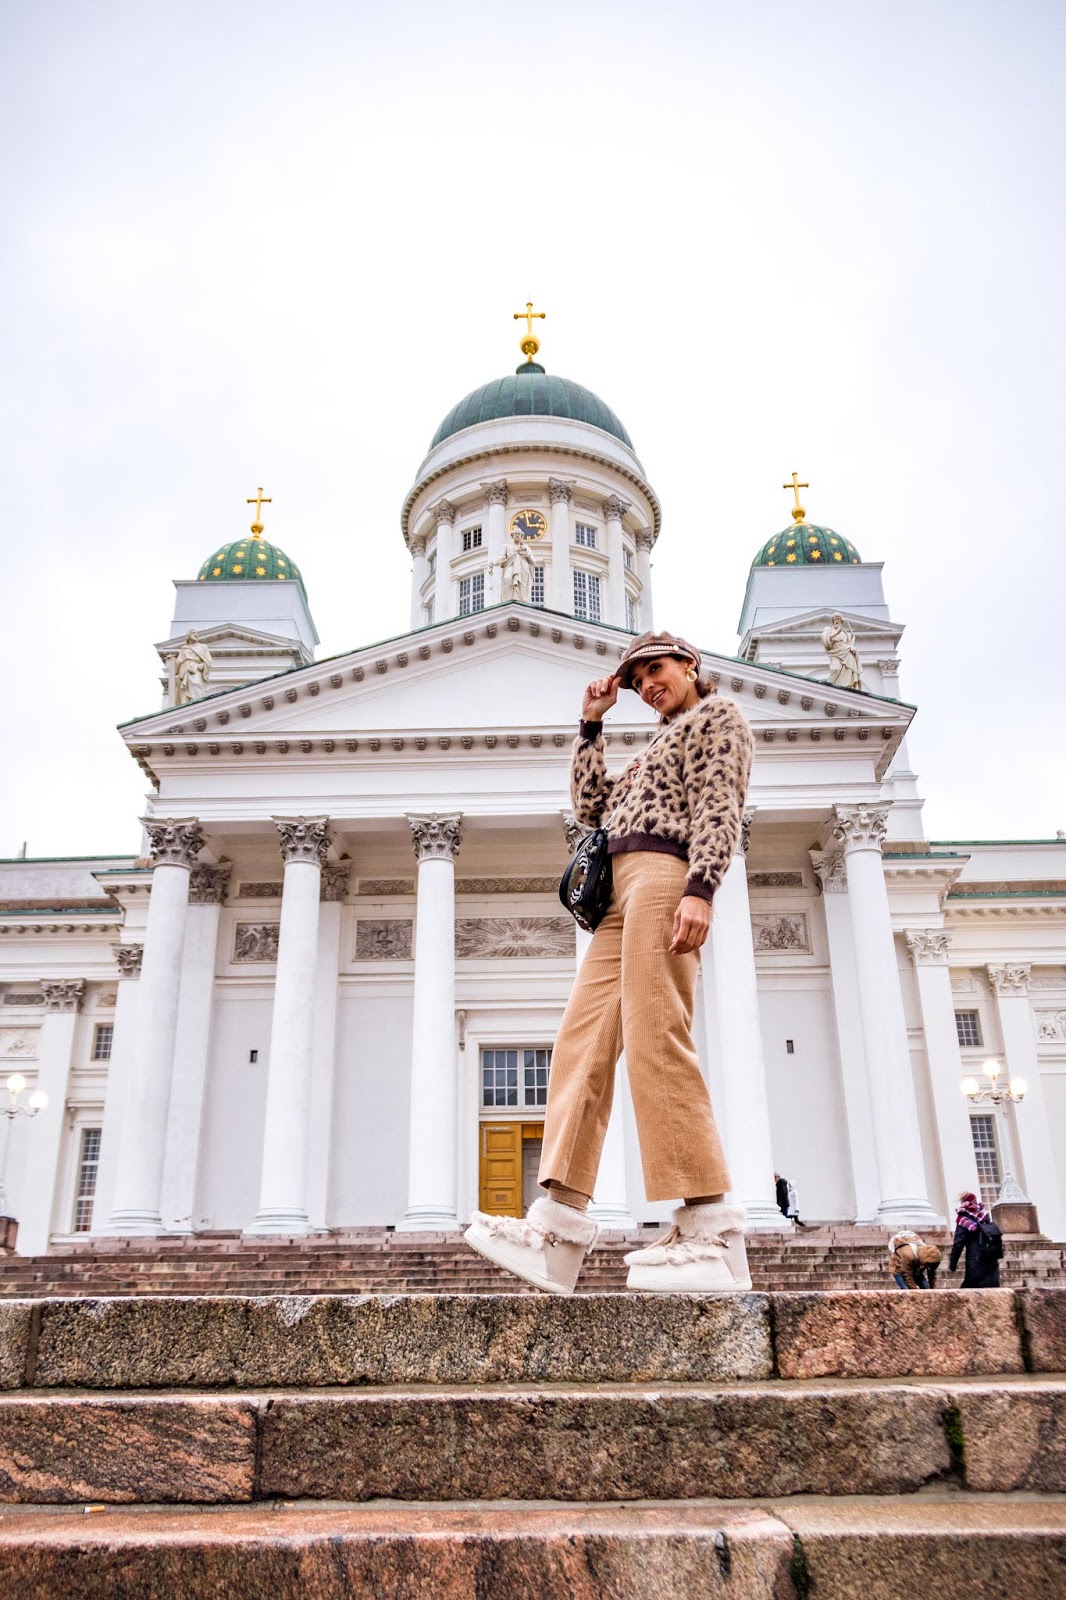 el-blog-de-silvia-rodriguez-lifestyle-travel-finlandia-my-helsinki-pantalones-pana-jersey-leopardo-hm-inuikii-blogger-influencer